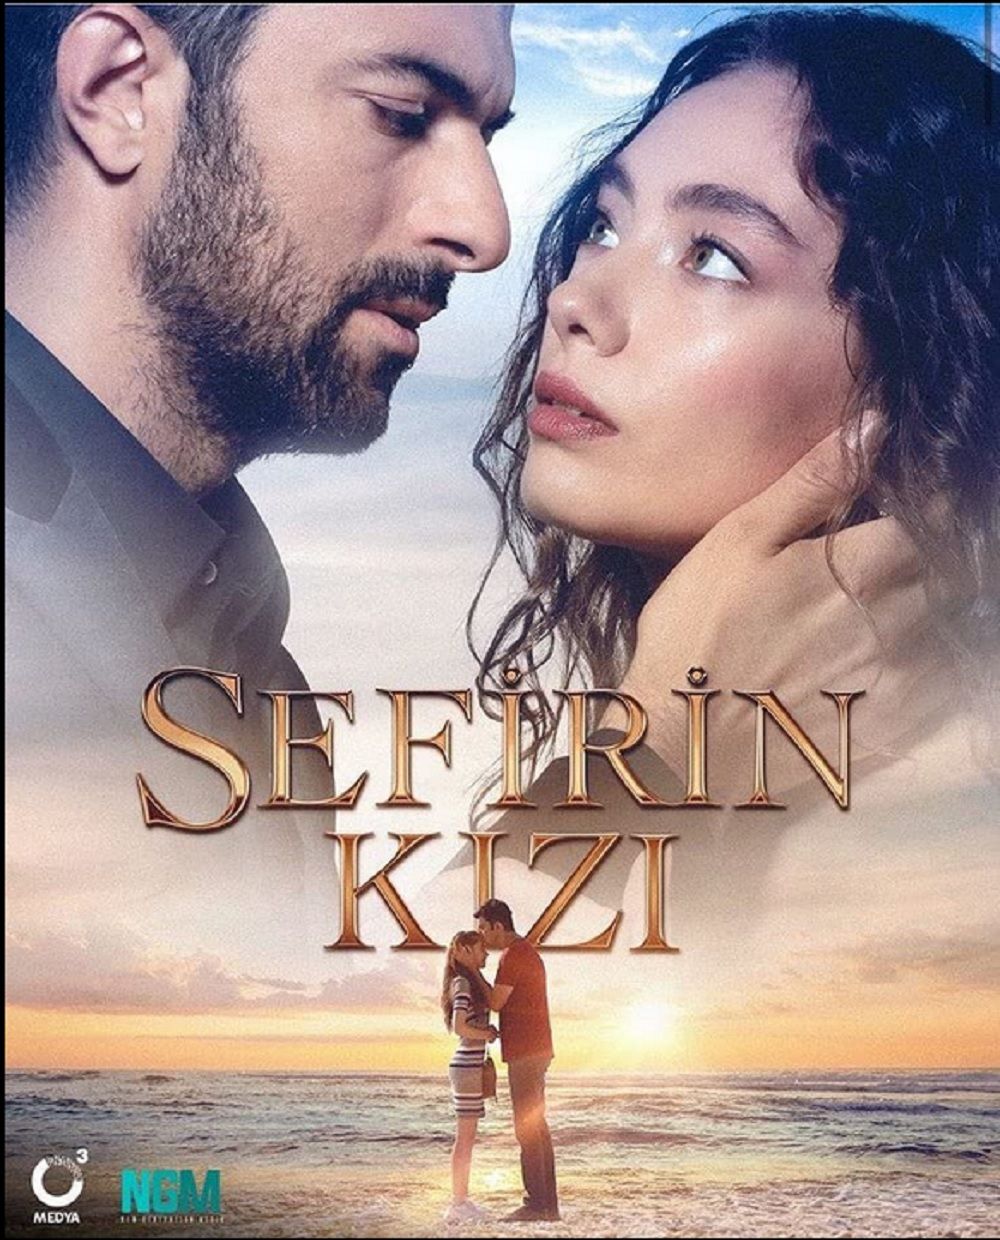 3 Rekomendasi Film Turki Romantis Yang Wajib Anda Tonton Dijamin Bikin Baper Halaman 3 